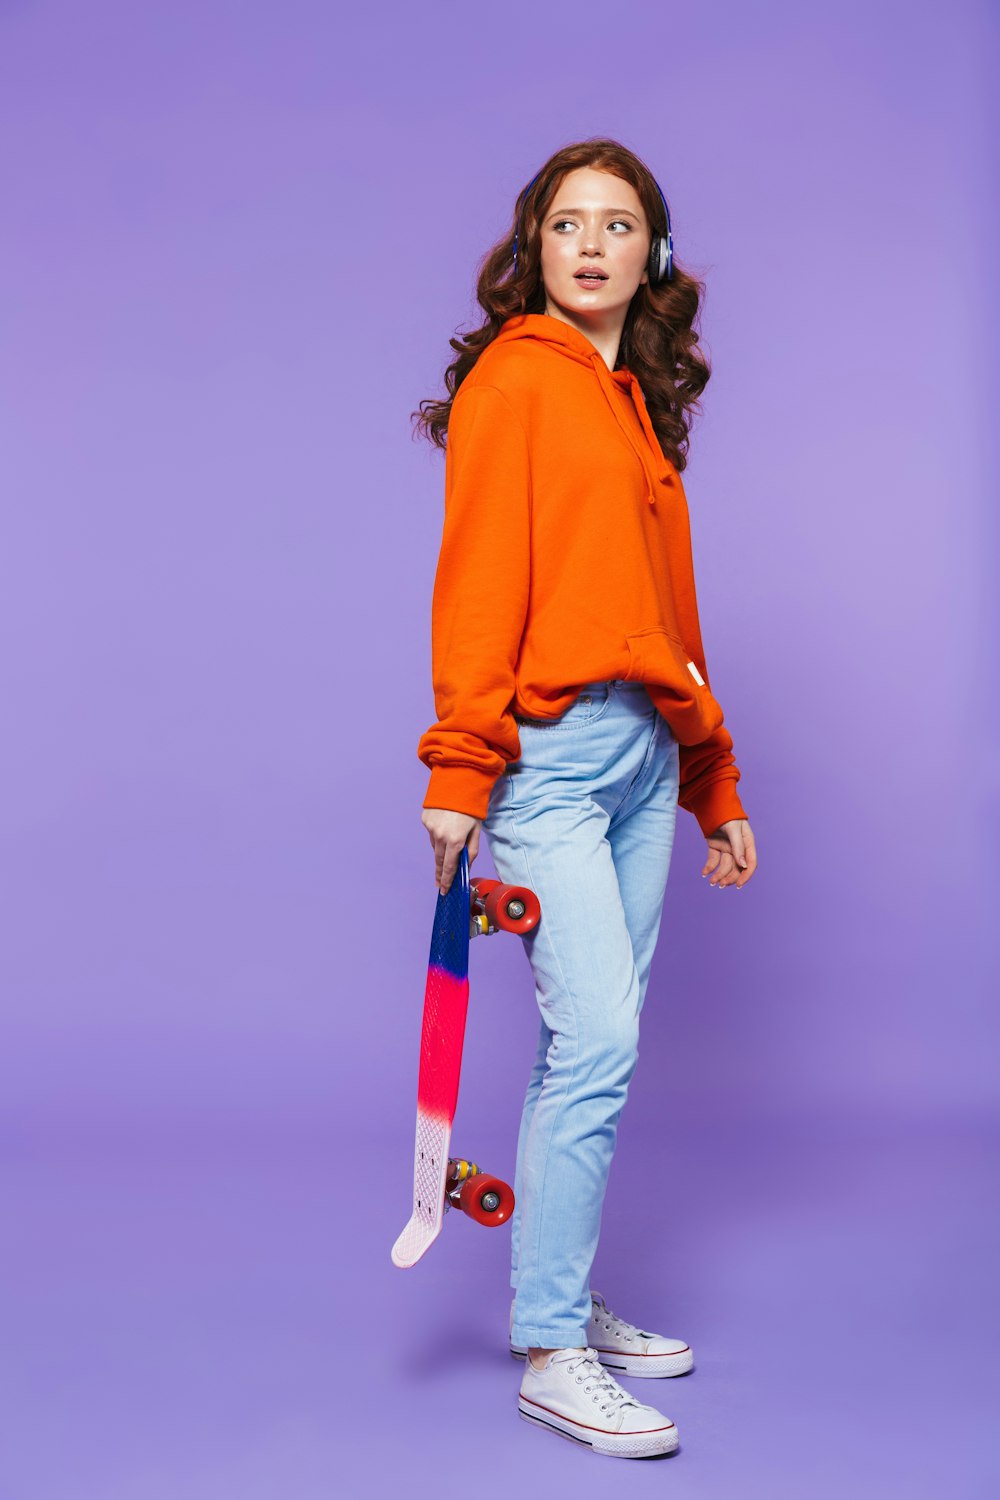 a woman in an orange hoodie holding a skateboard